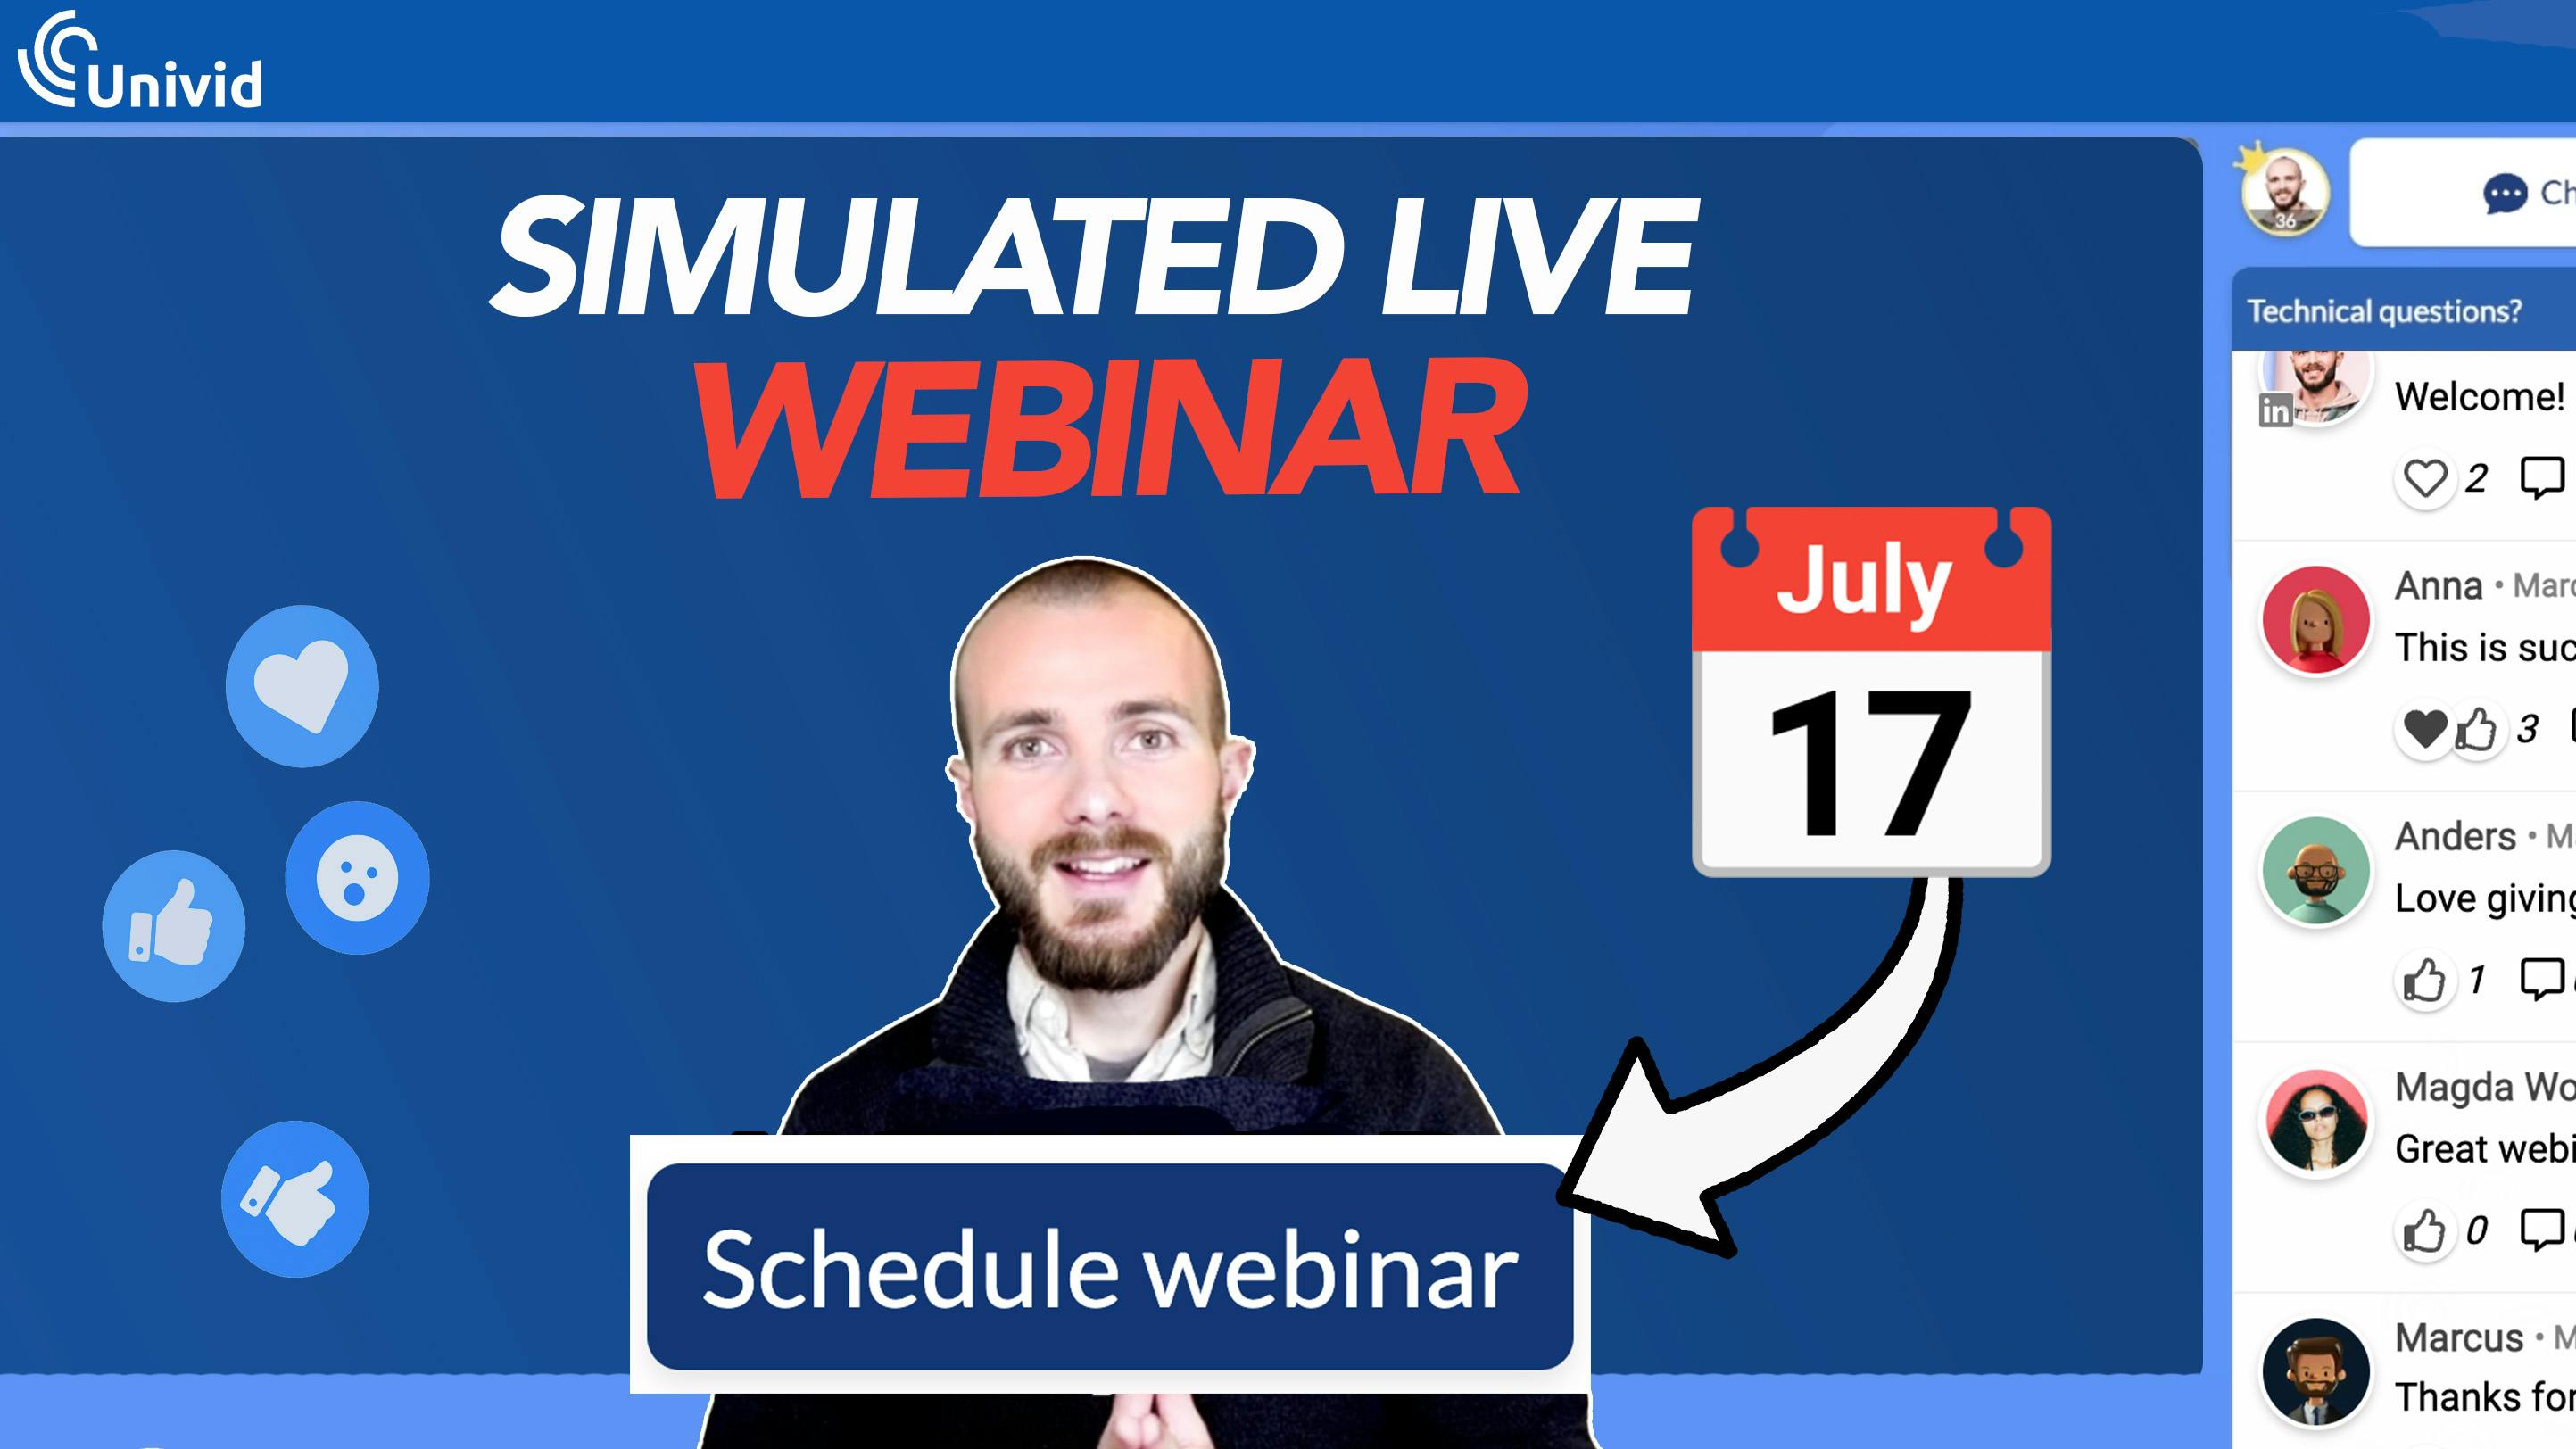 Simulive webinars or simulated live webinars